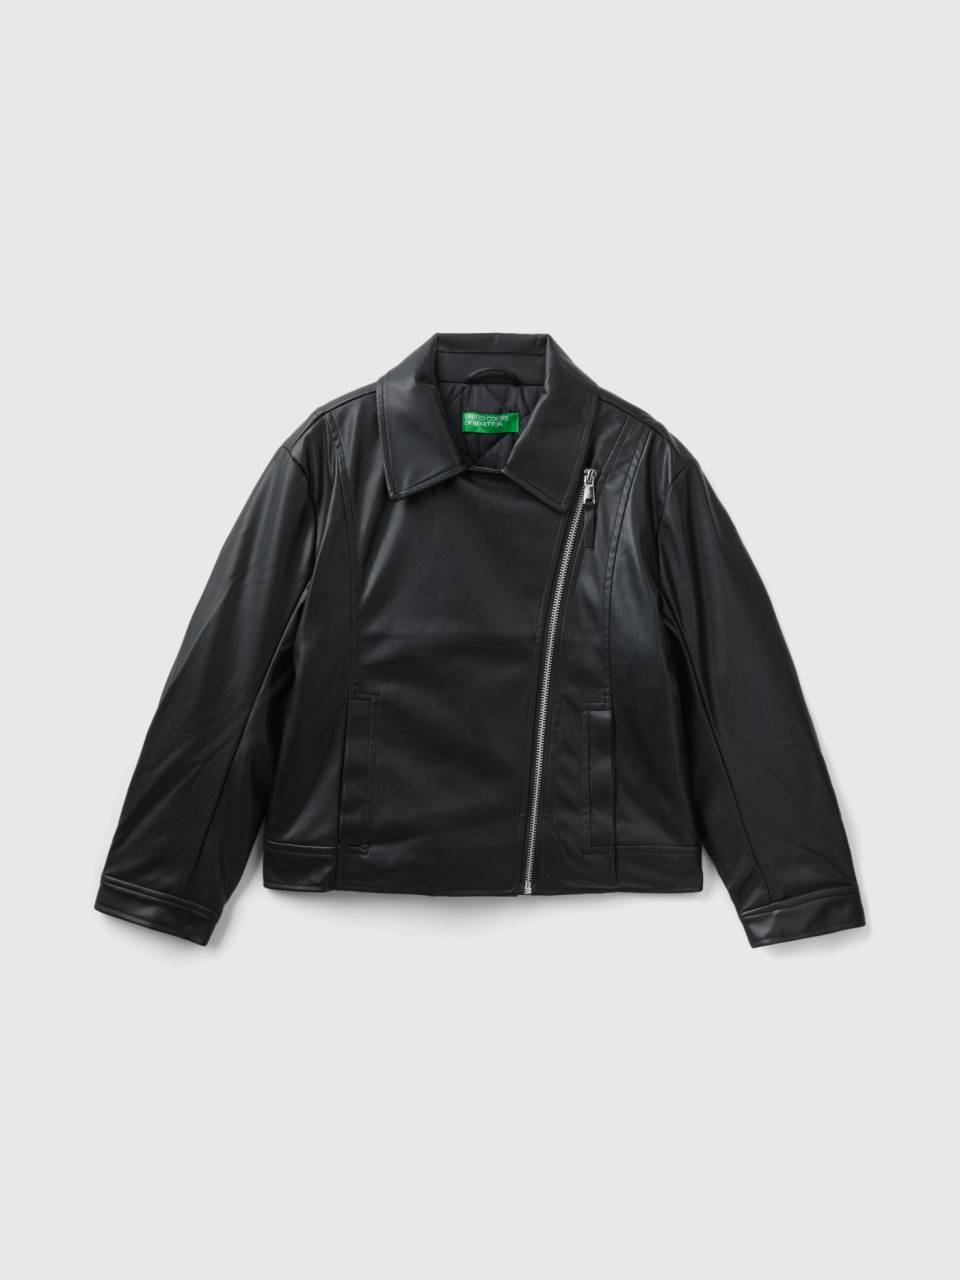 UCB Jacket Buy United Colors of Benetton Jackets & Coats | Myntra